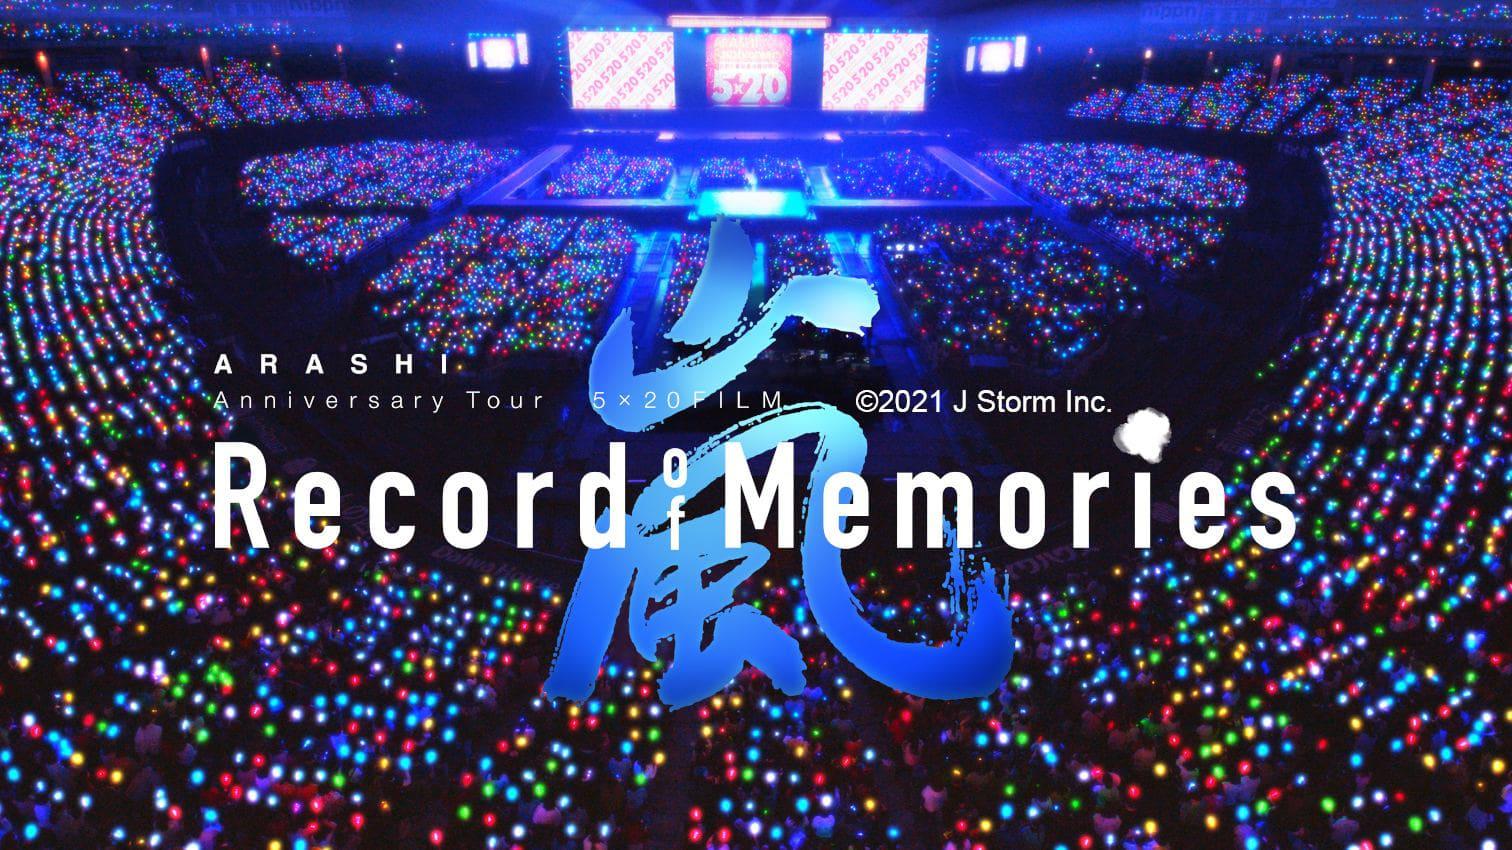 ARASHI Anniversary Tour 5×20 FILM “Record of Memories” backdrop